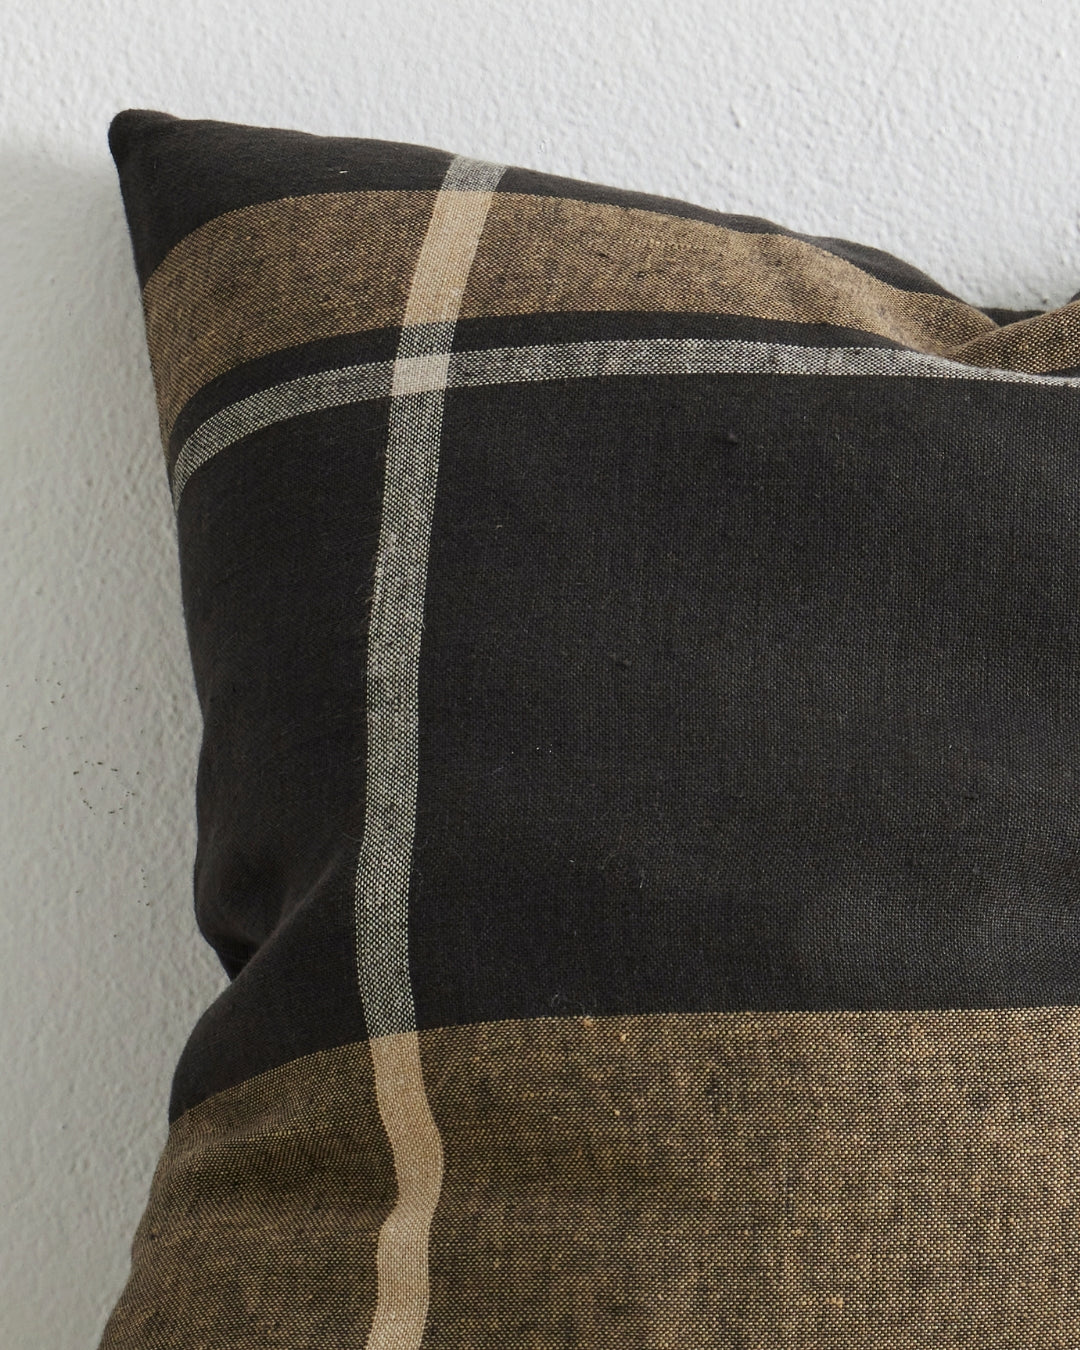 Dante Linen Cushion - Weave